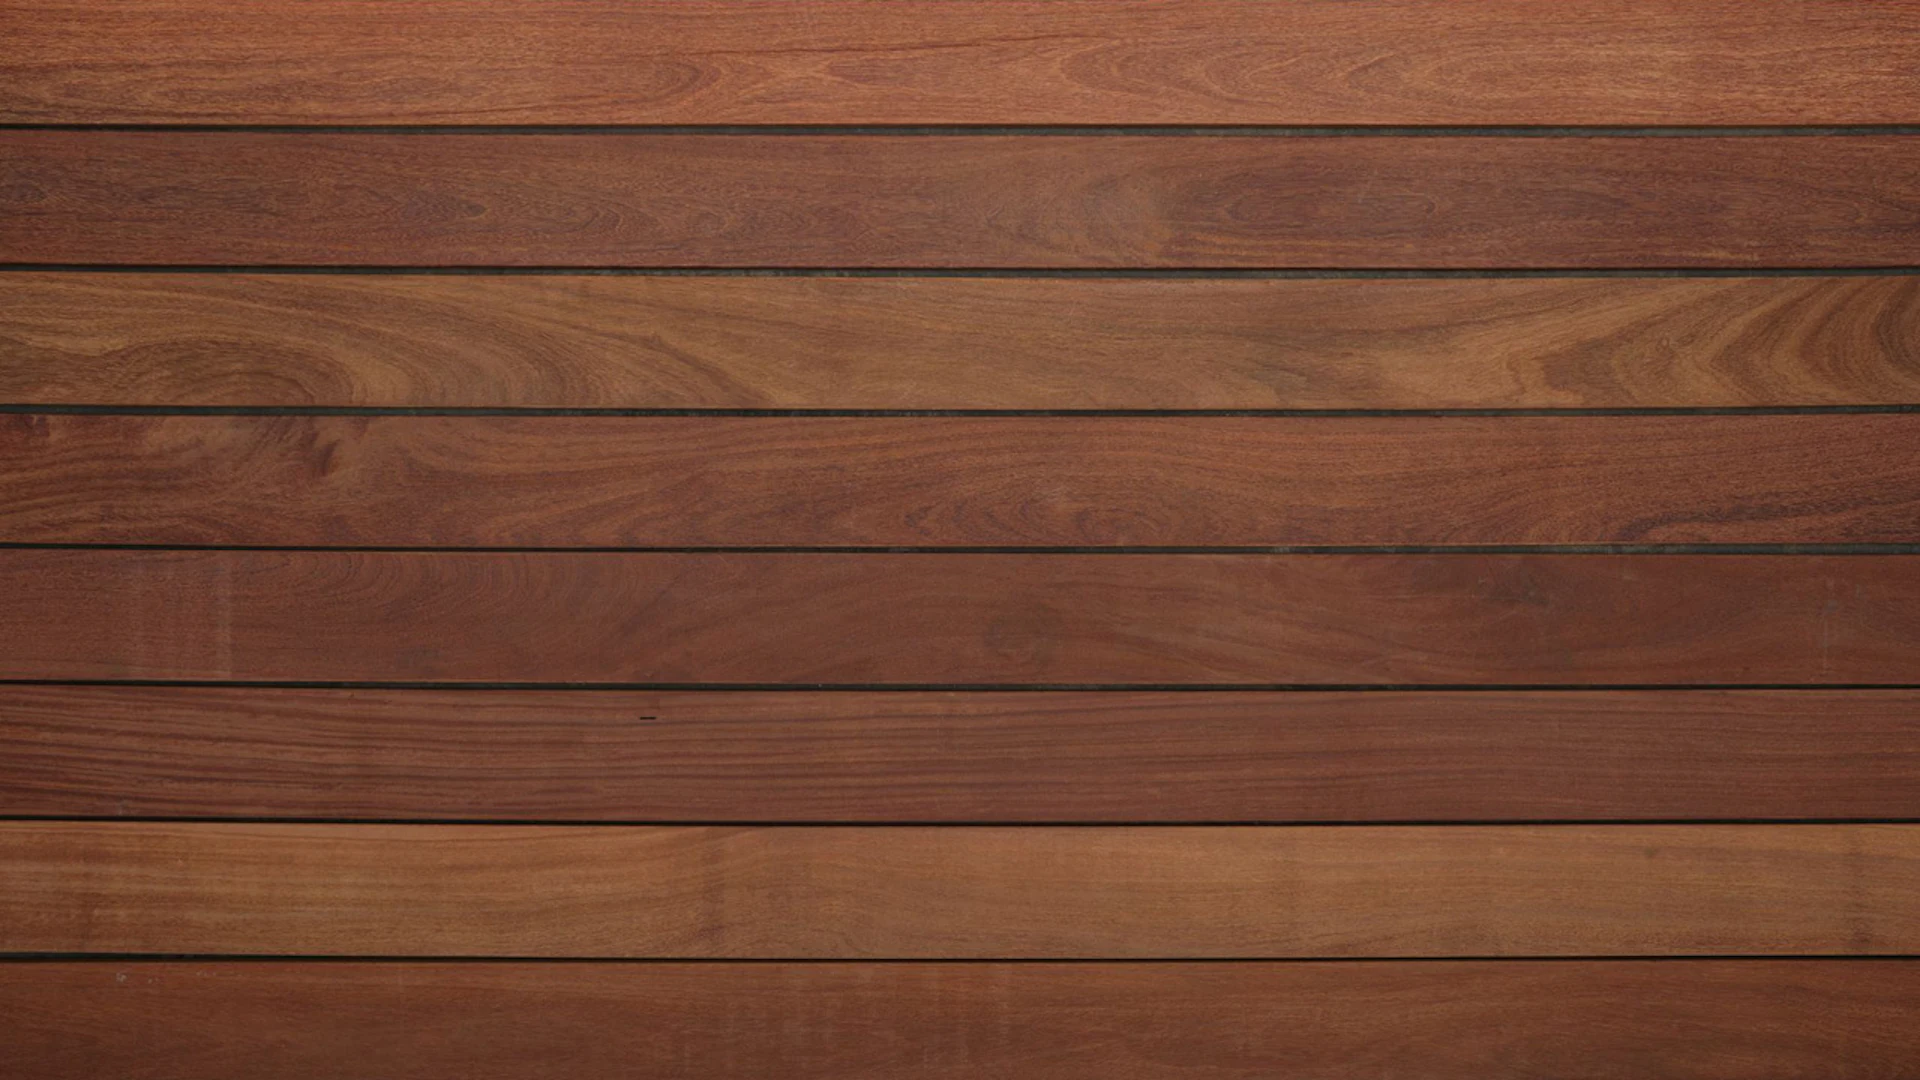 TerraWood Wood Decking Cumaru brown PRIME 21 x 145 x 2450mm - smooth on both sides